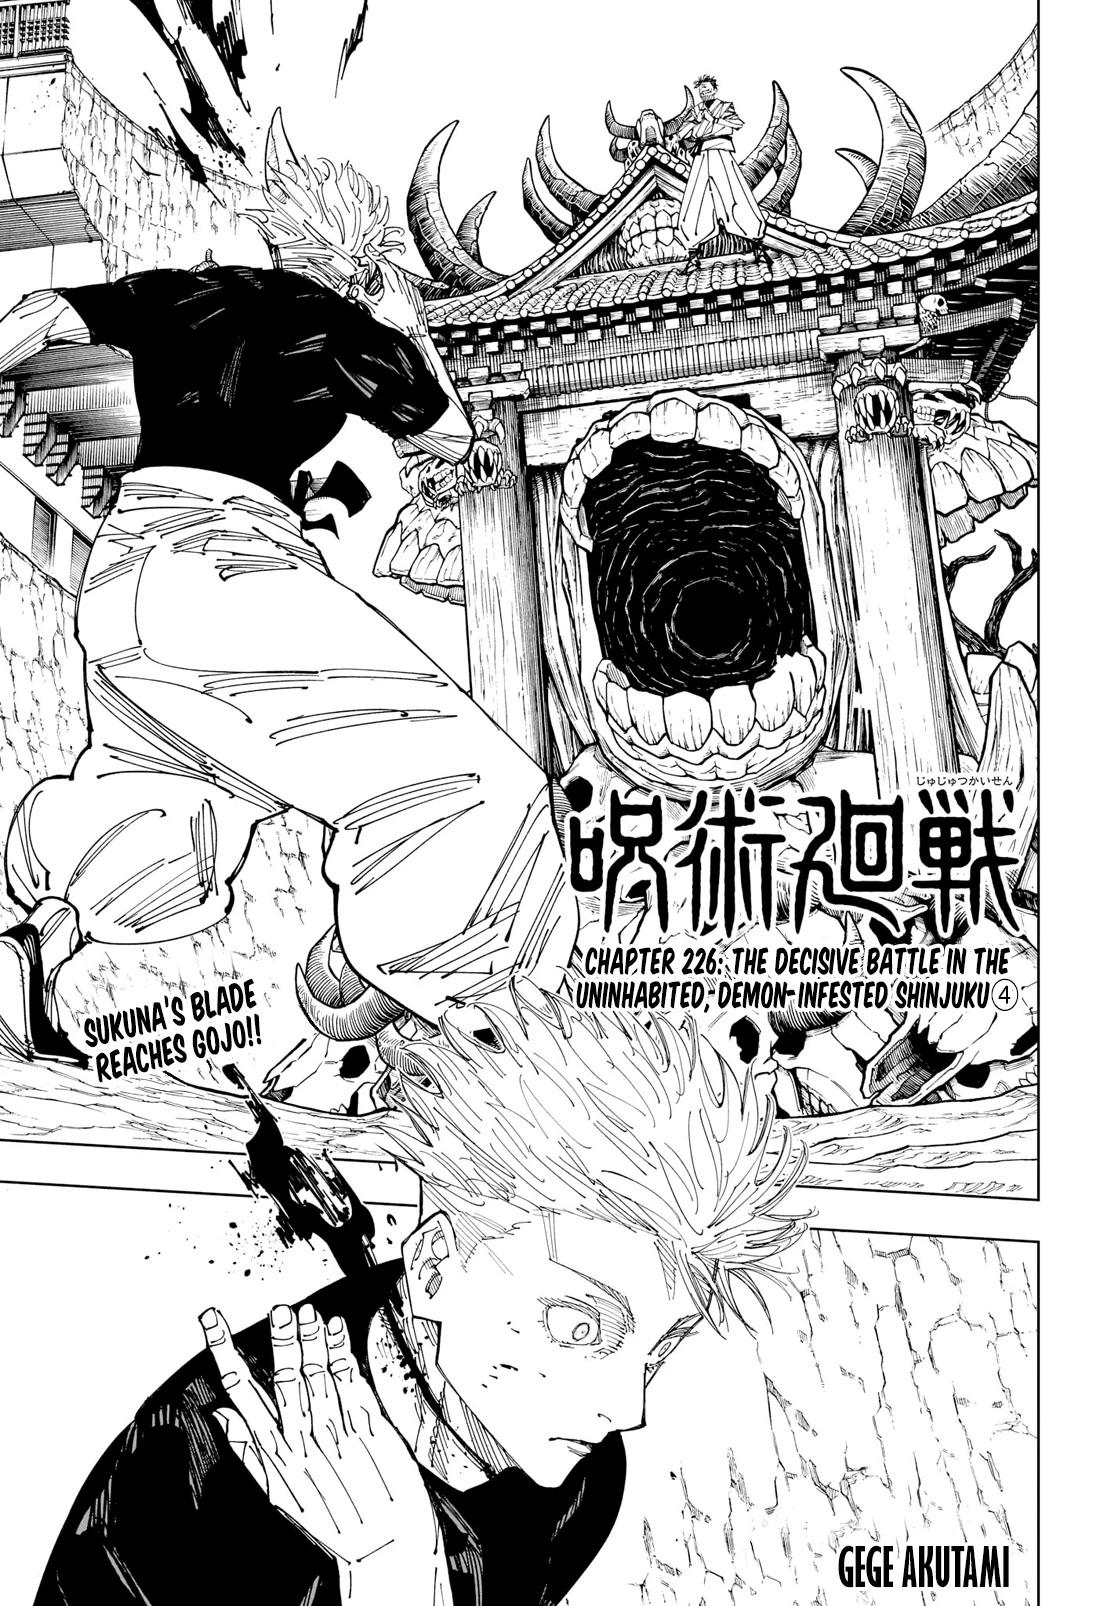 Jujutsu Kaisen Chapter 226: The Decisive Battle In The Uninhabited, Demon-Infested Shinjuku ④ page 1 - Mangakakalot